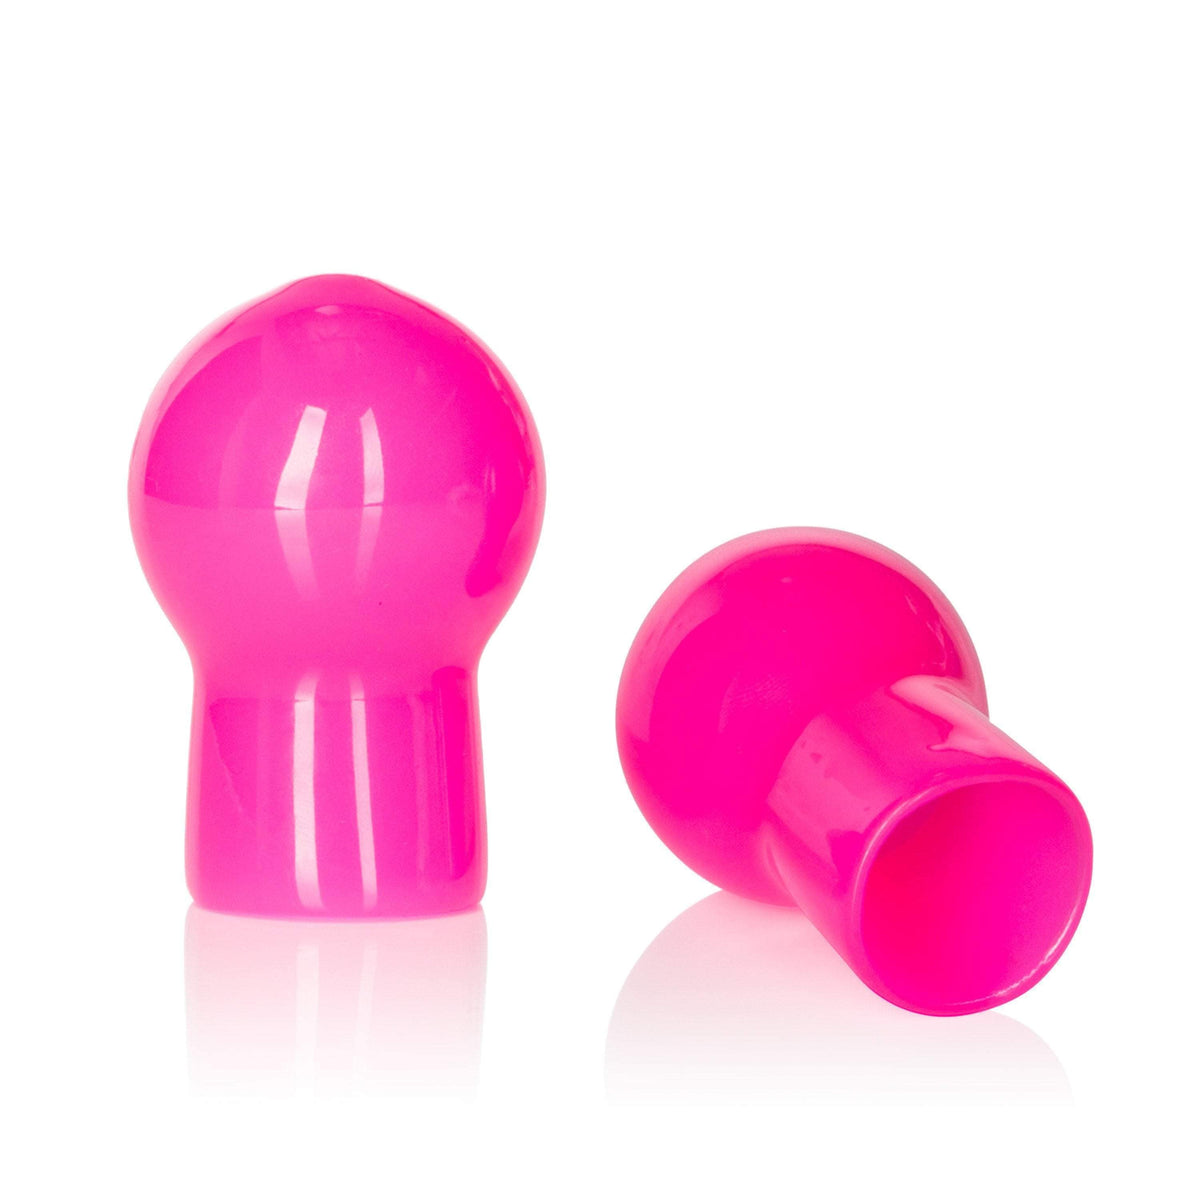 California Exotics - Nipple Play Advanced Nipple Suckers (Pink) CE1647 CherryAffairs